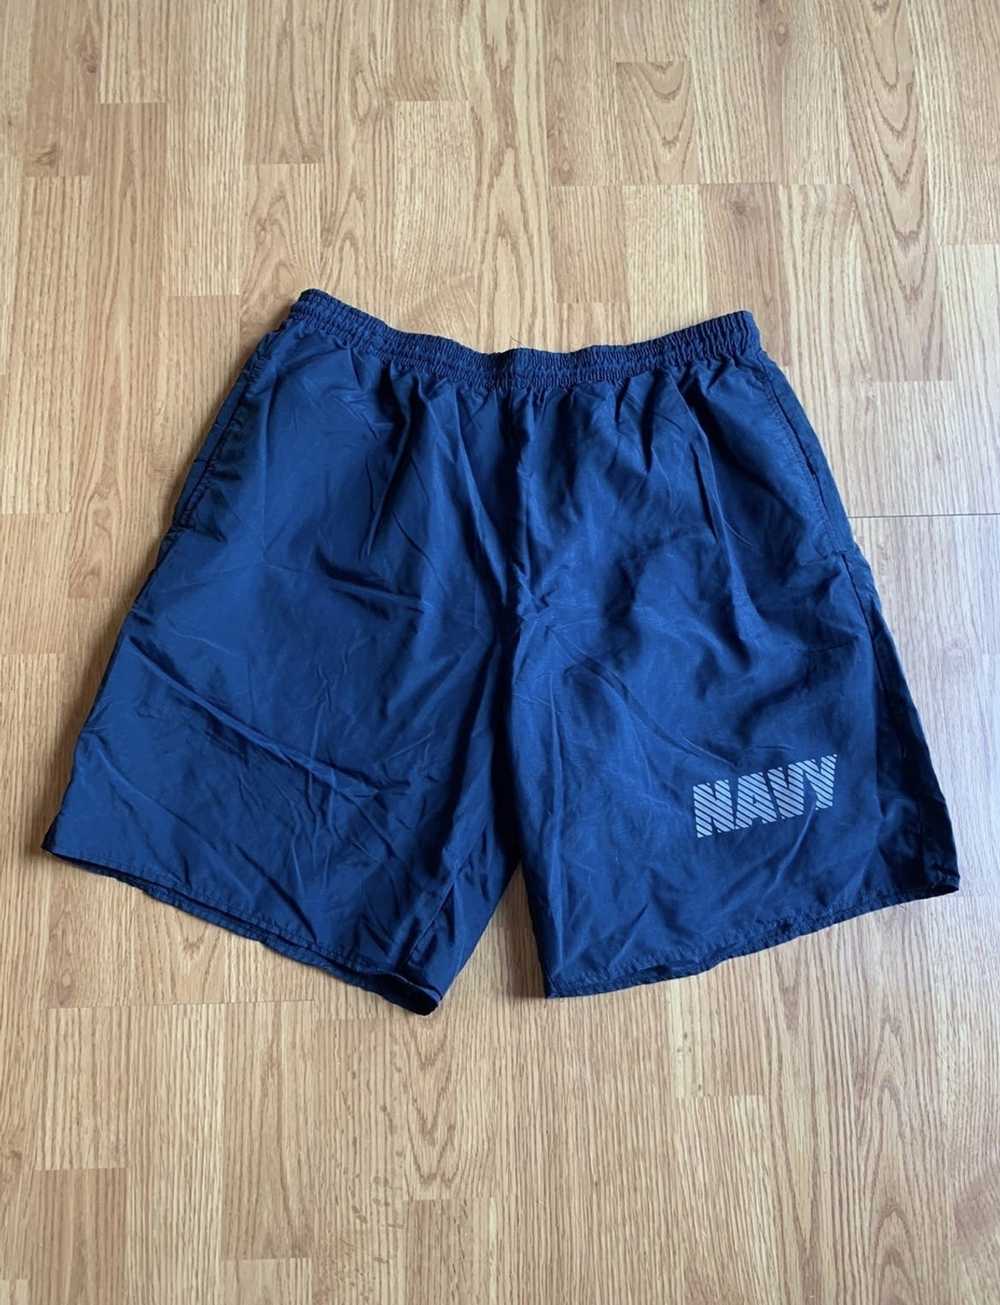 Military × Vintage Vintage Navy Shorts - image 1